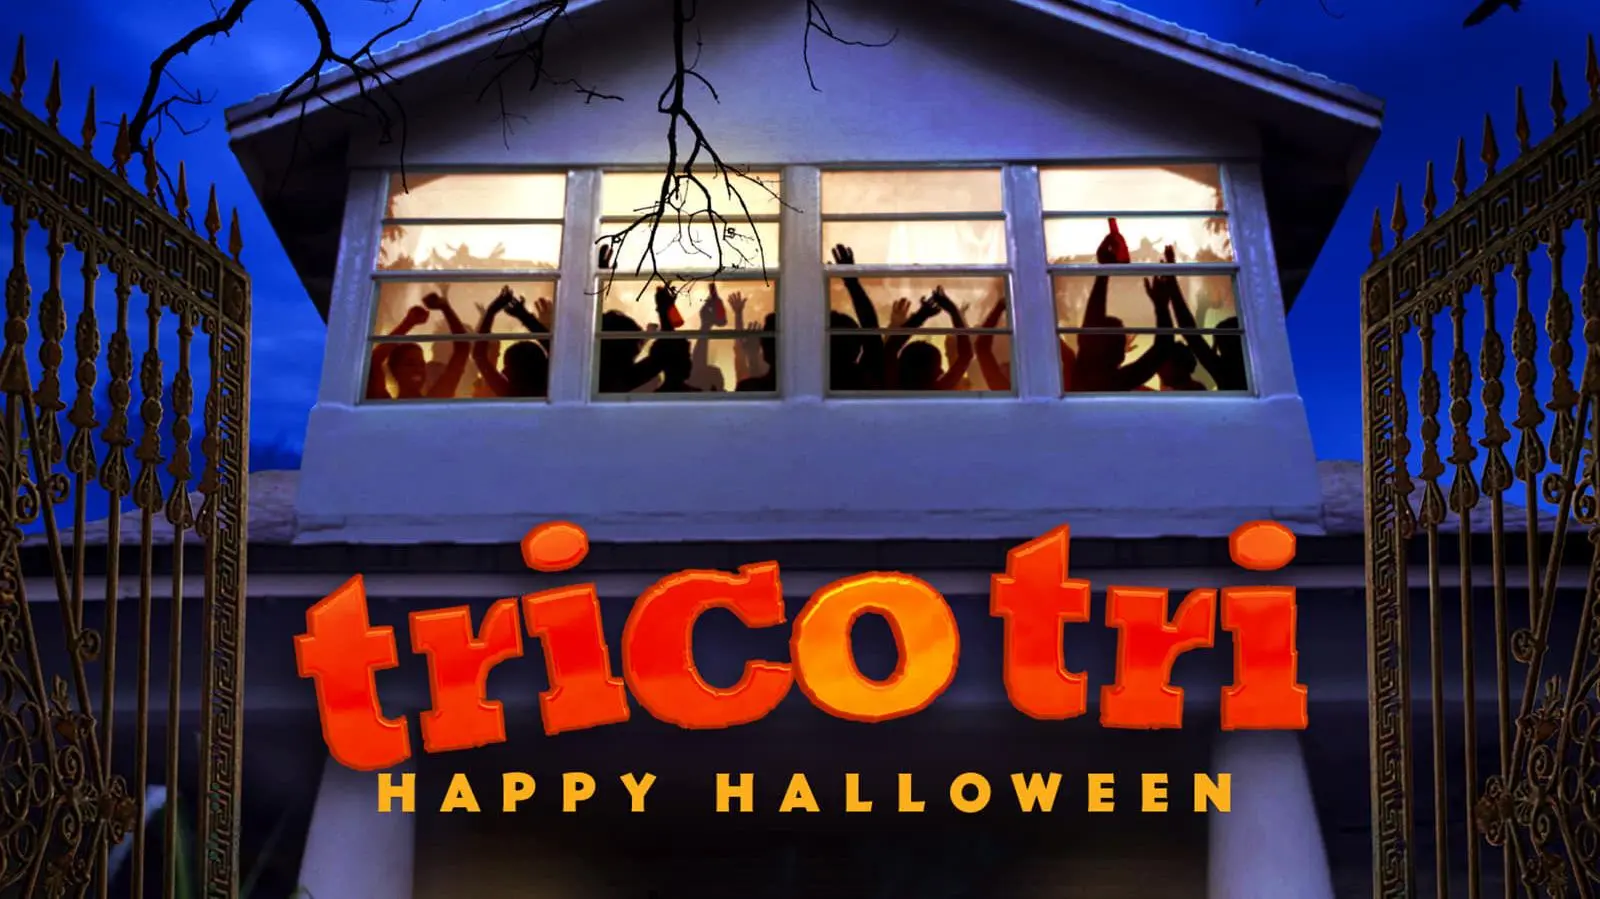 Trico Tri Happy Halloween_peliplat